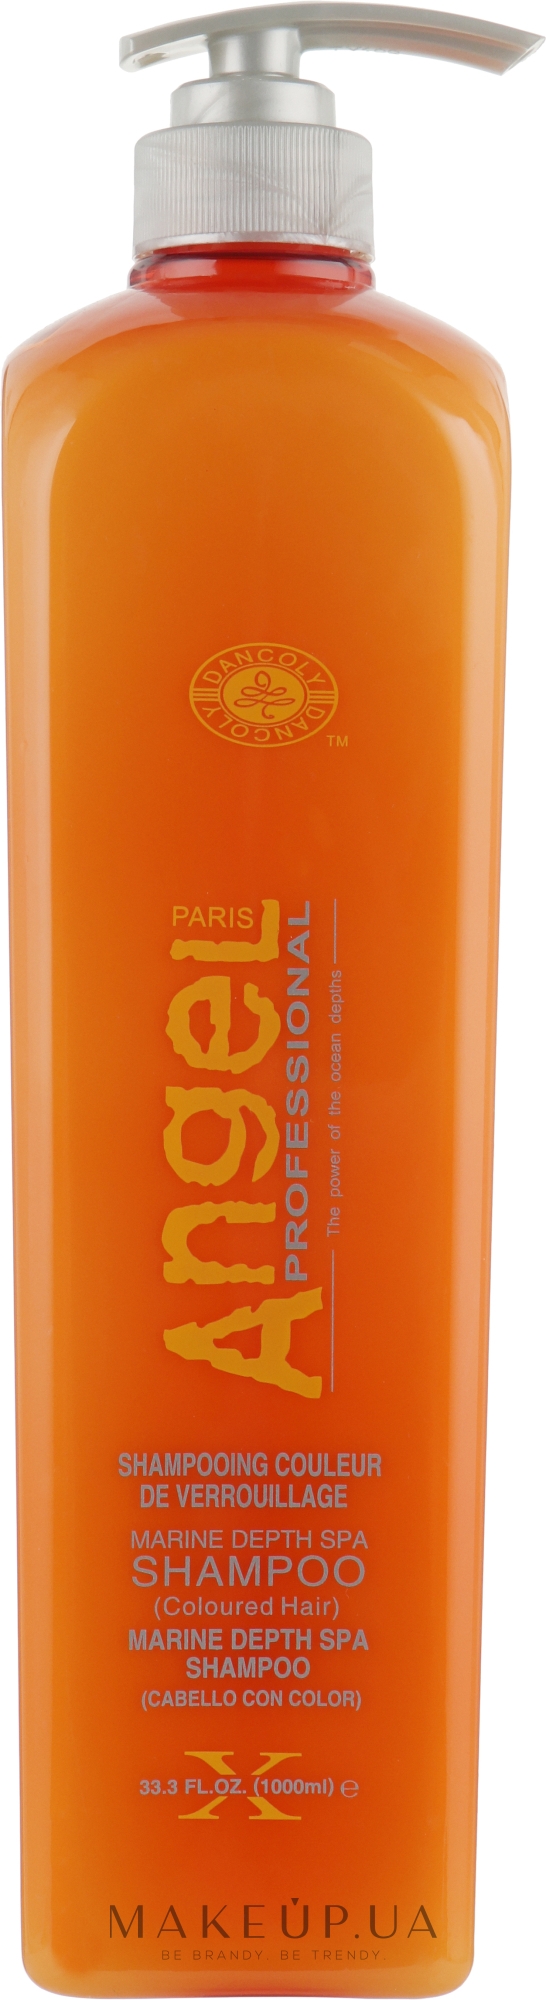 Шампунь для фарбованого волосся - Angel Professional Paris Colored Hair Shampoo — фото 1000ml